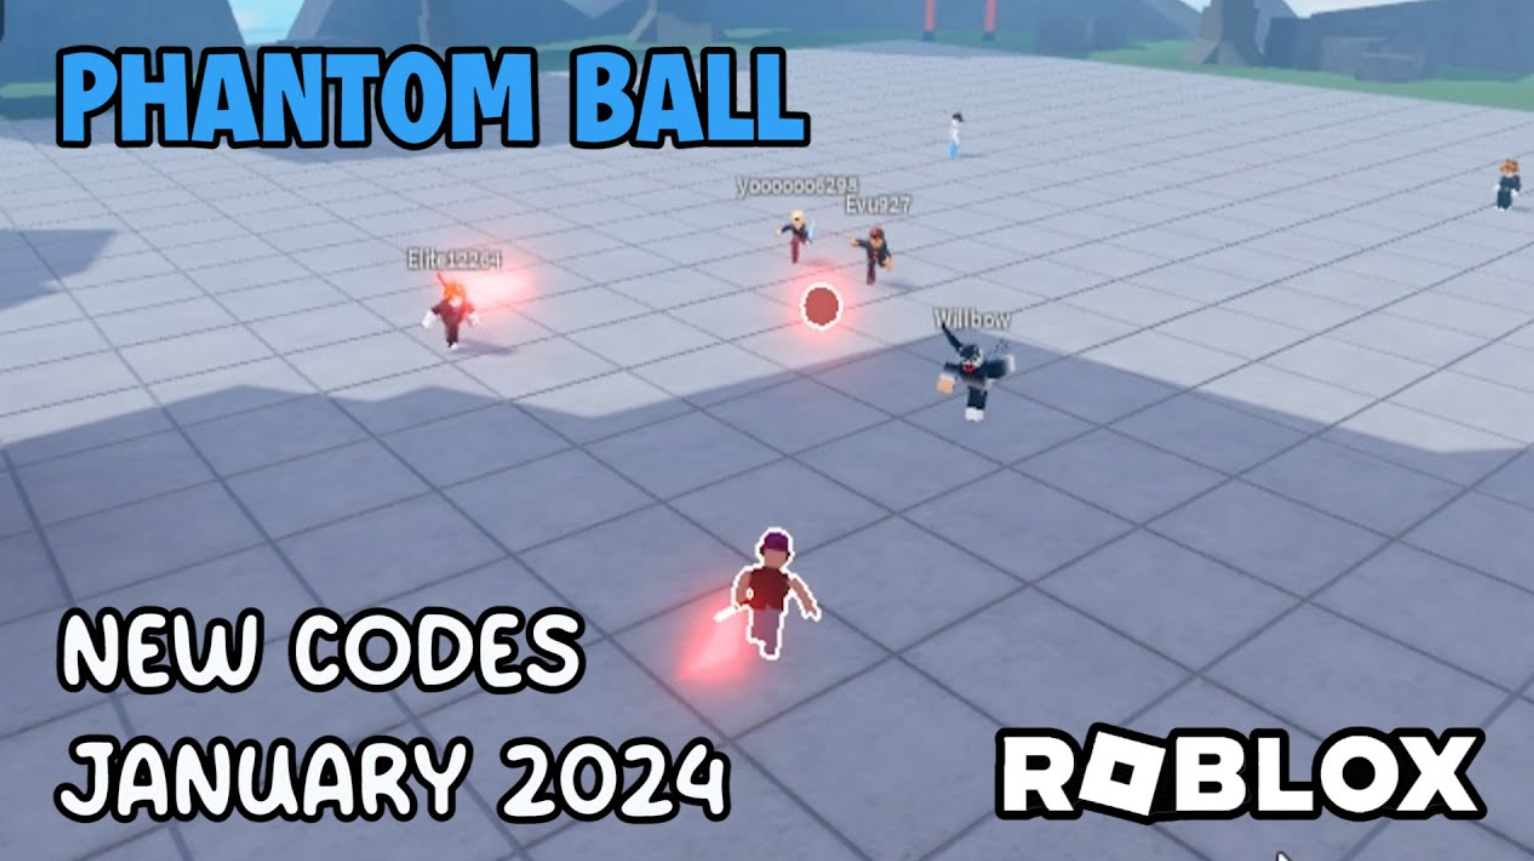 Phantom Ball Codes January 2024